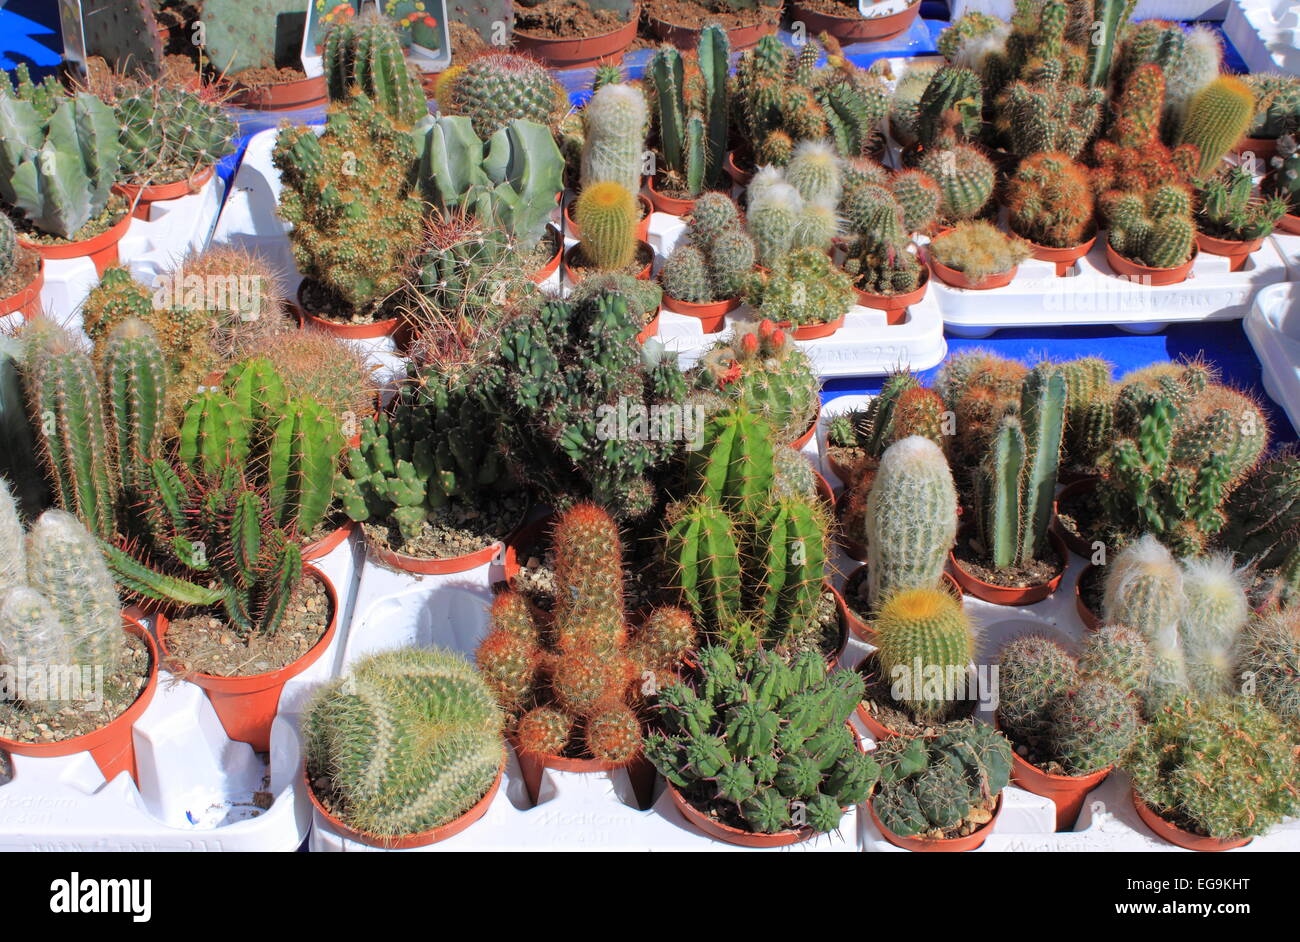 Many succulent plants in a nursery garden Stock Photo